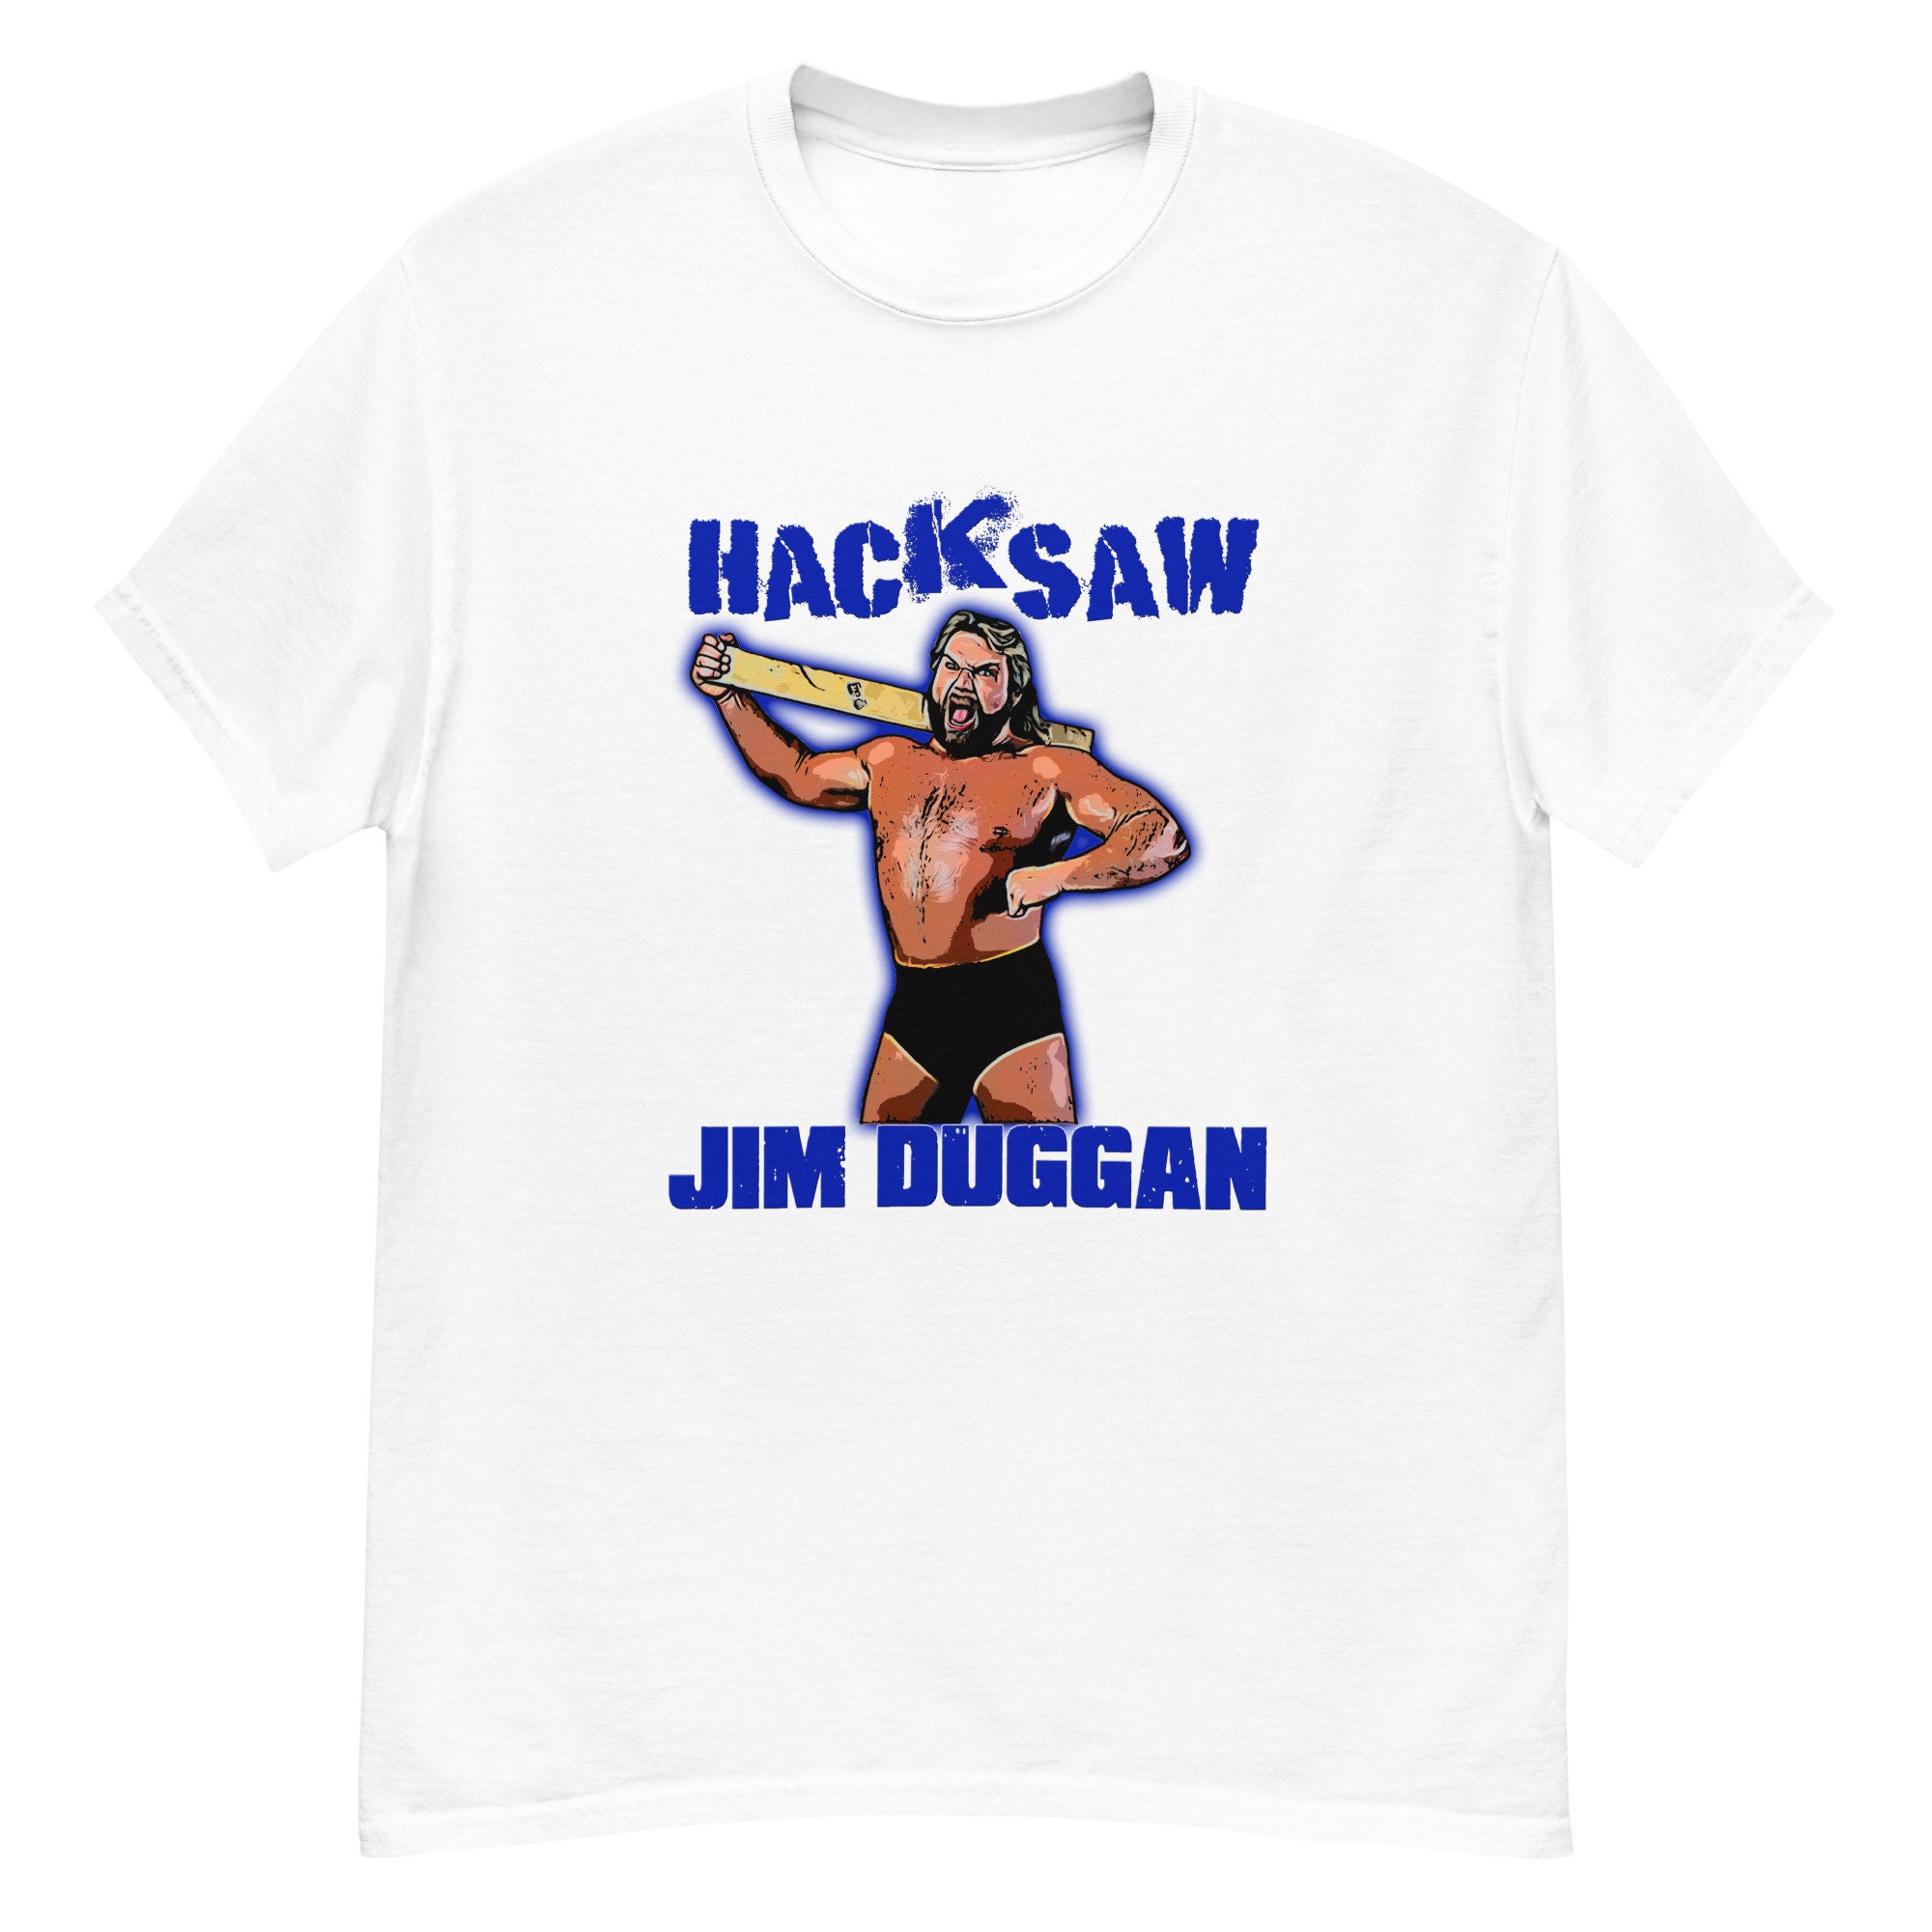 Discover hacksaw jim duggan tshirt  wrestling 80s tee